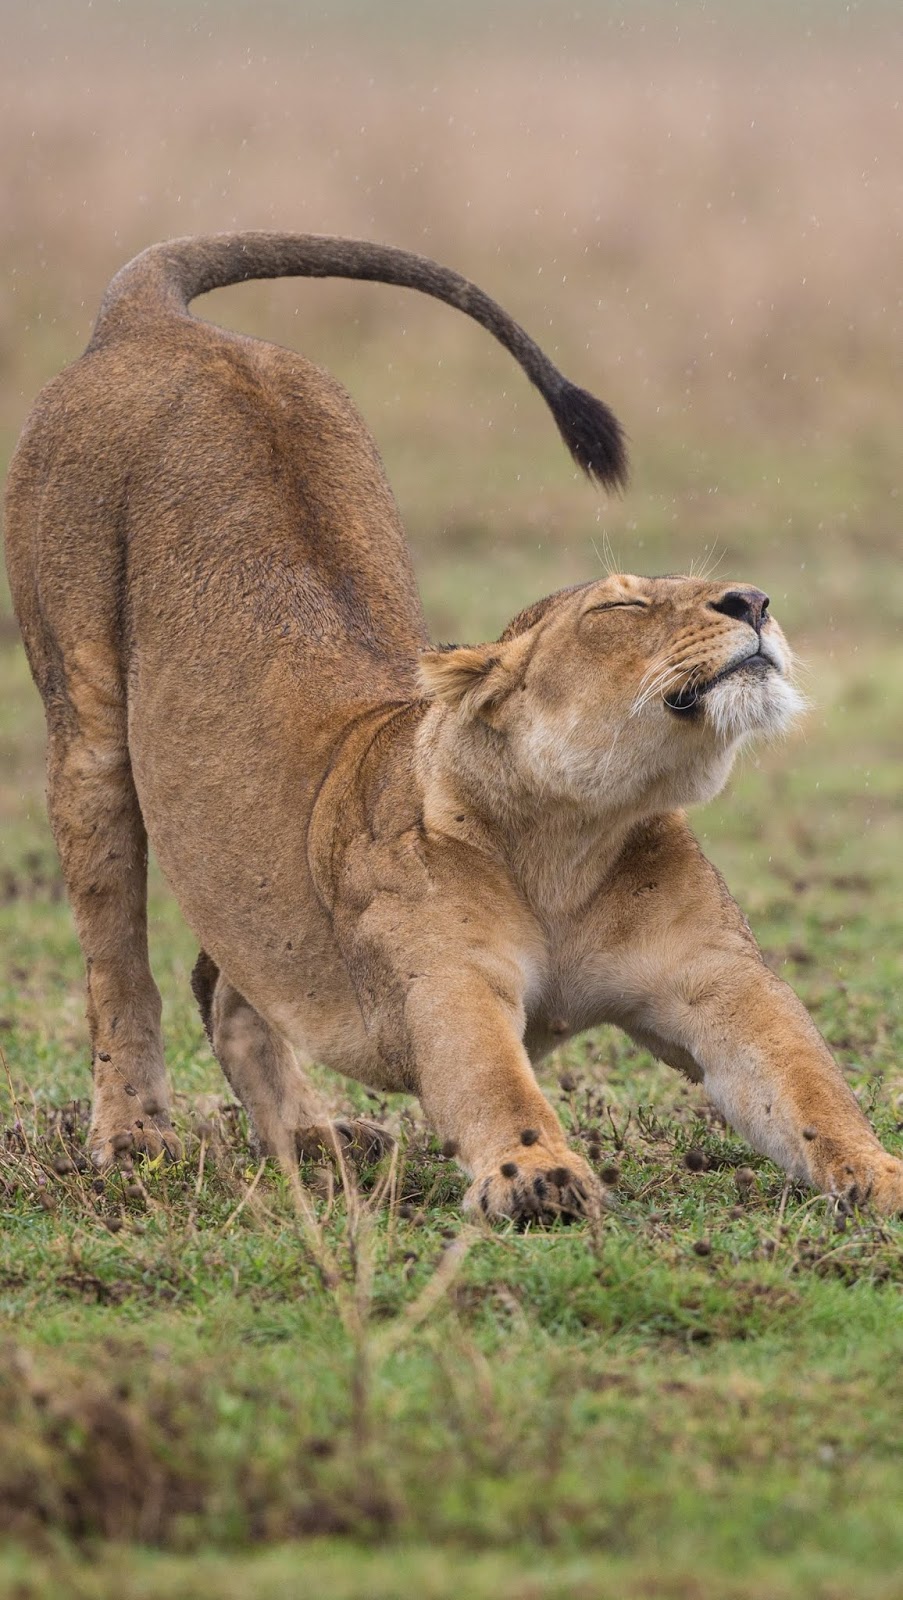 A lioness yoga stretch.